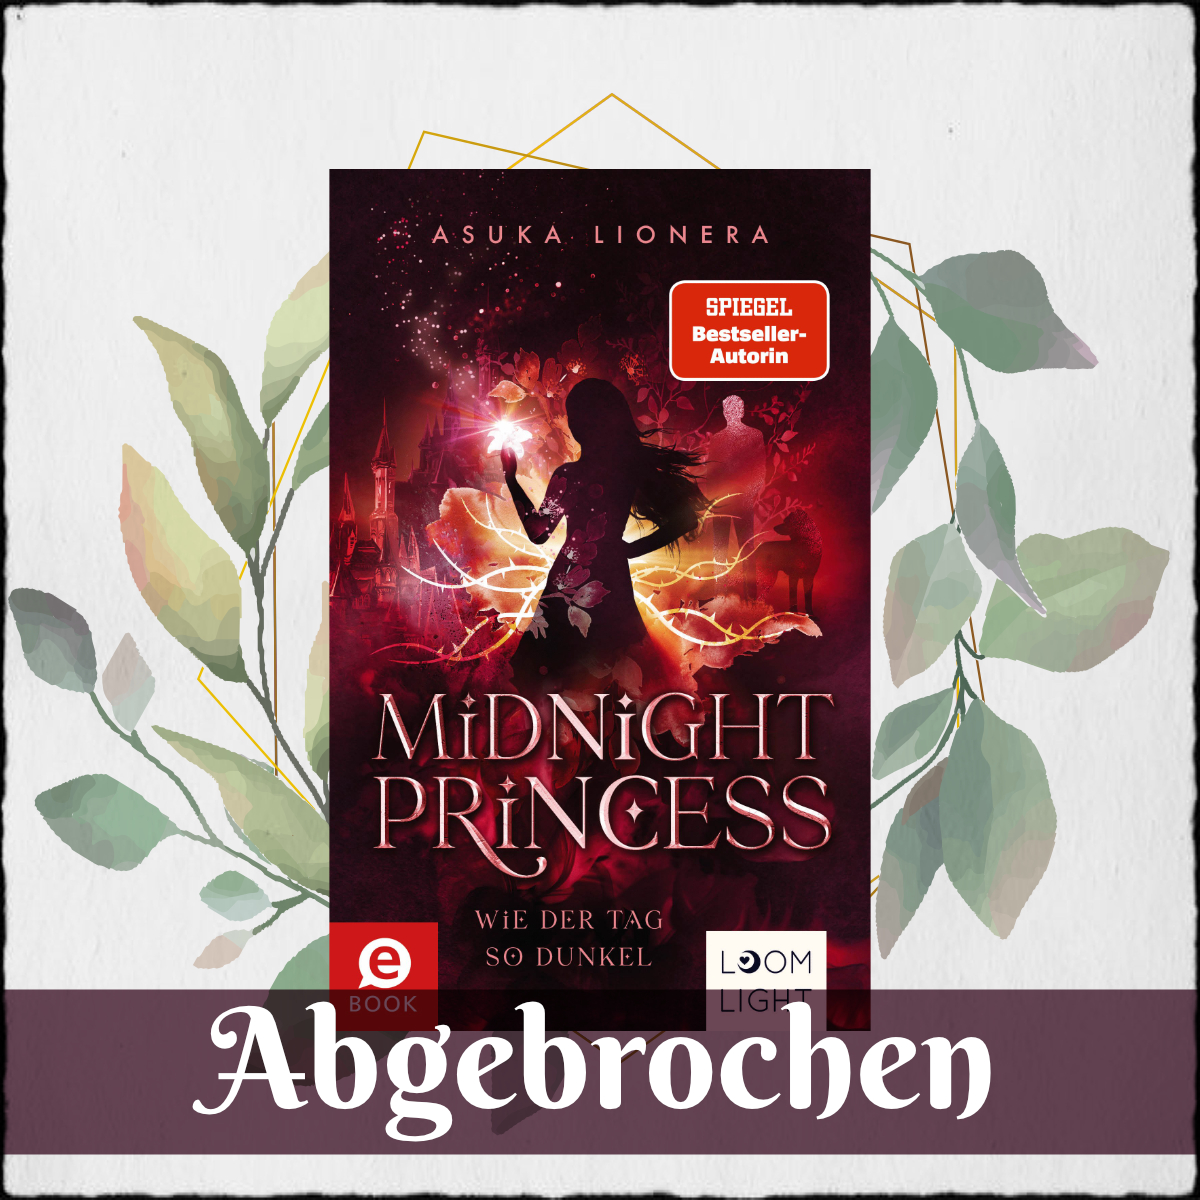 Asuka Lionera “Wie der Tag so dunkel – Midnight Princess 2” © 2022 Loomlight by Thienemann-Esslinger Verlag